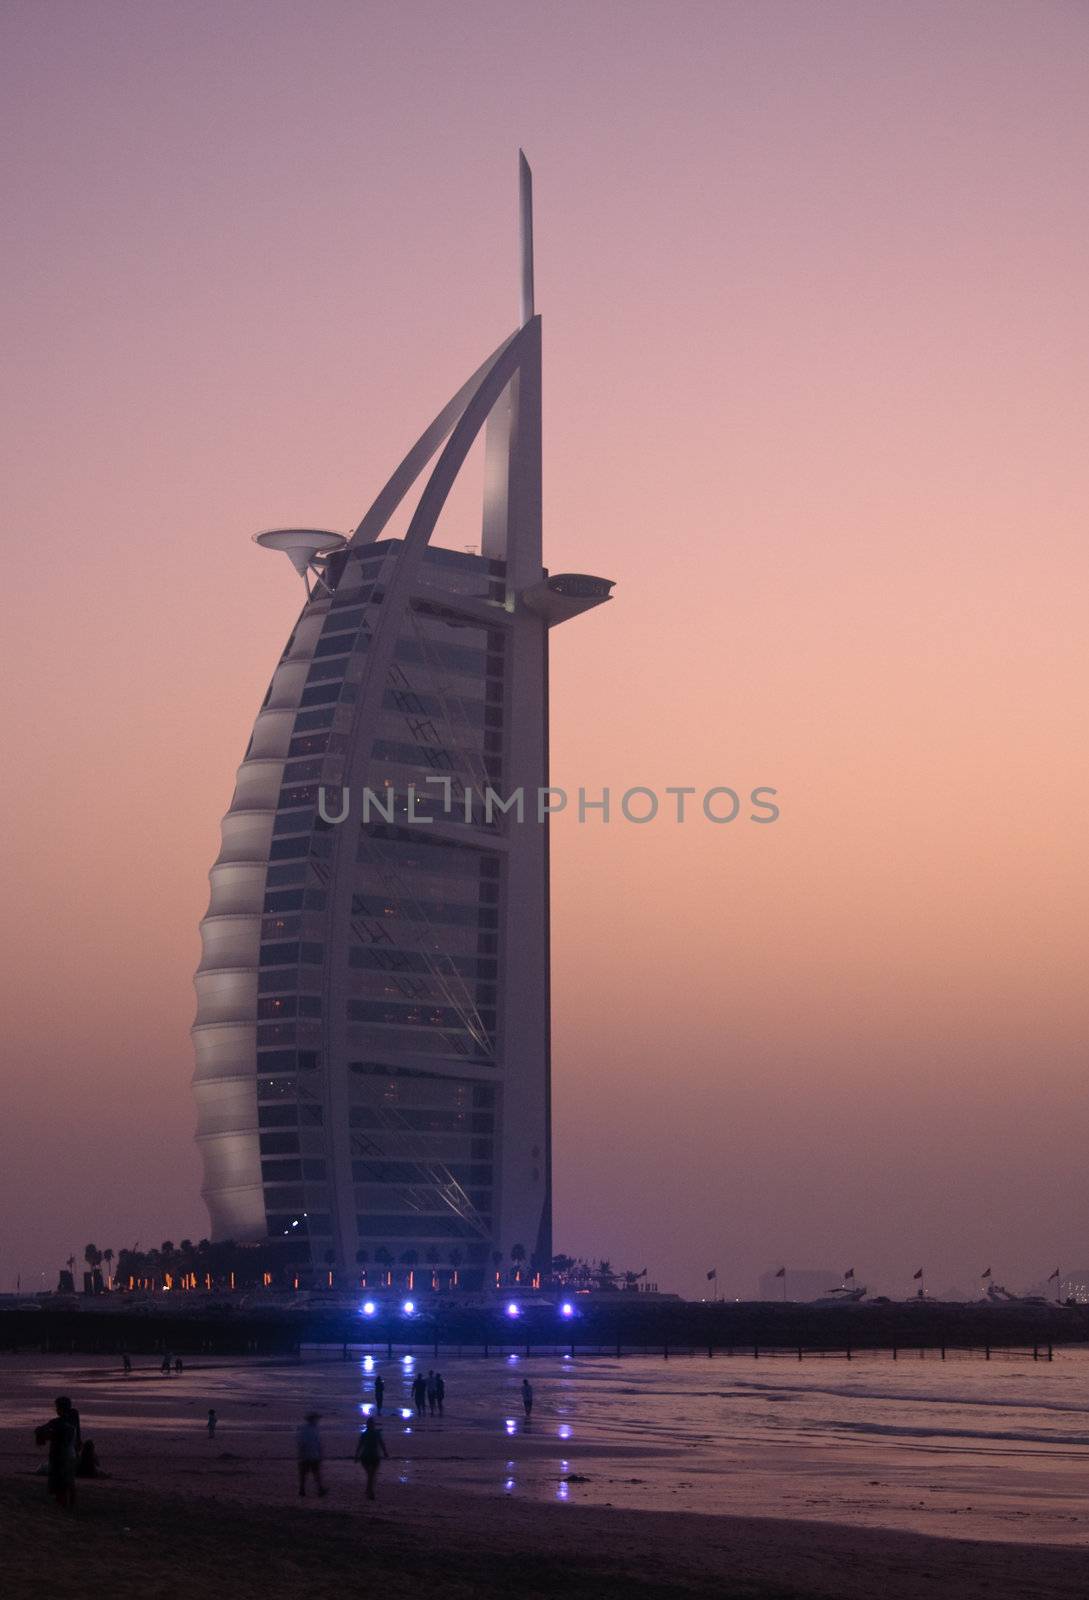 Sunset over the Burj al Arab Hotel in Dubai